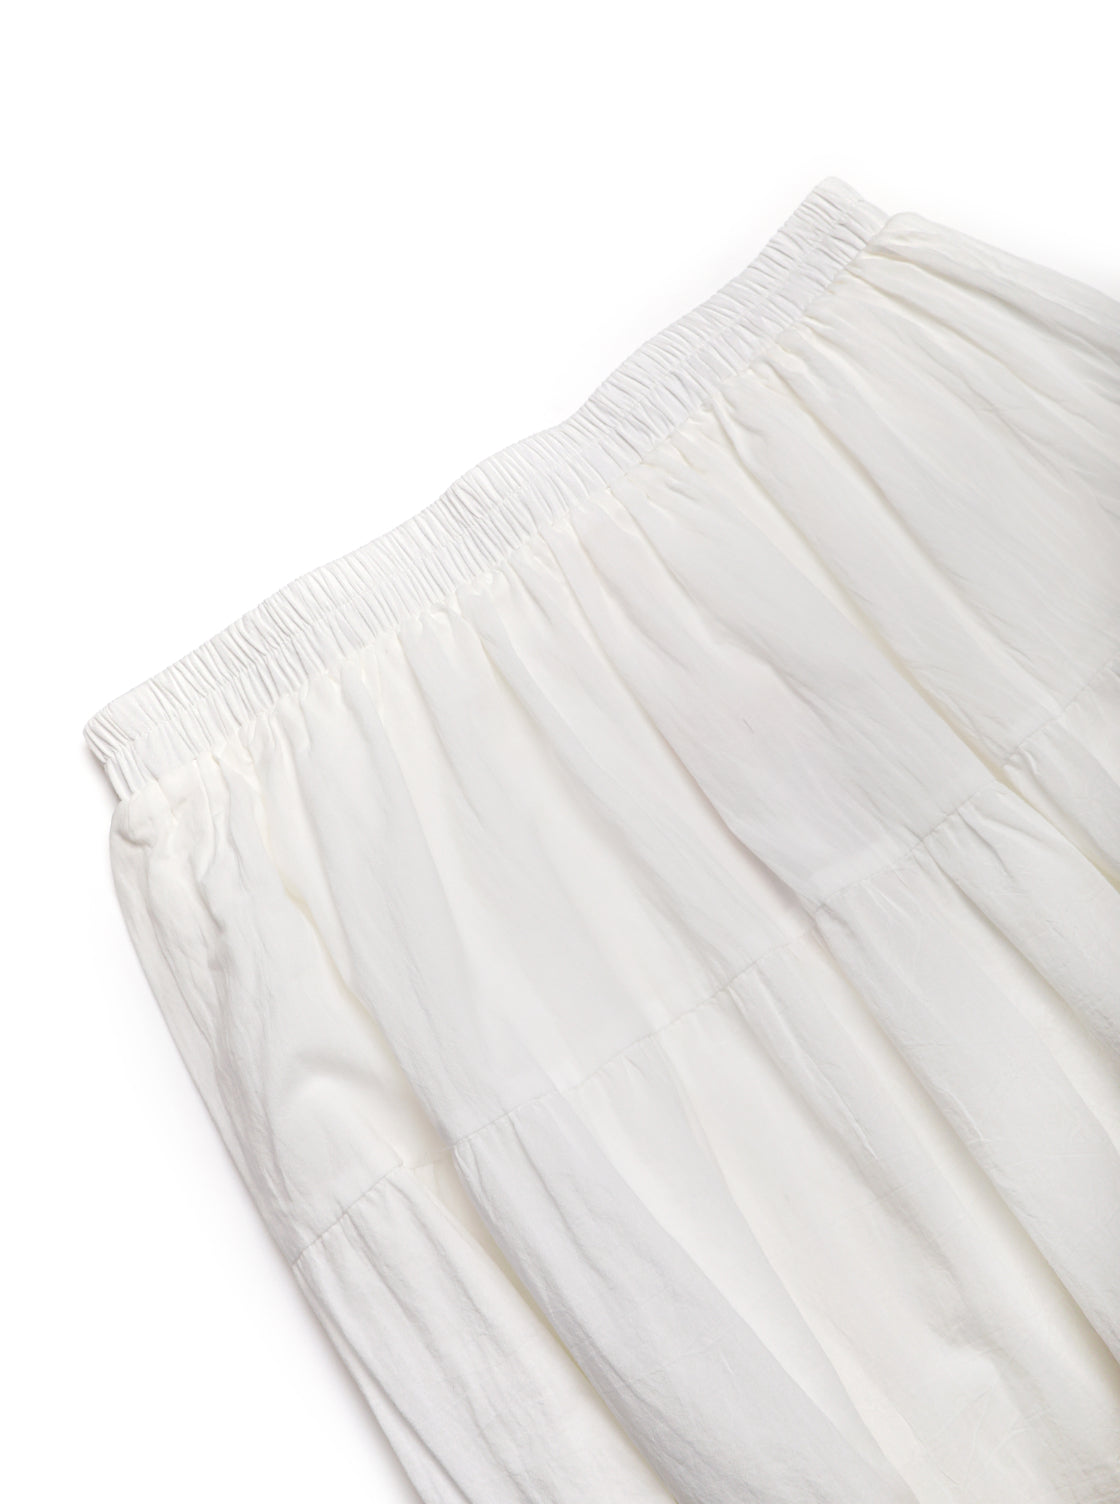 Angelica Tiered Cotton Skirt